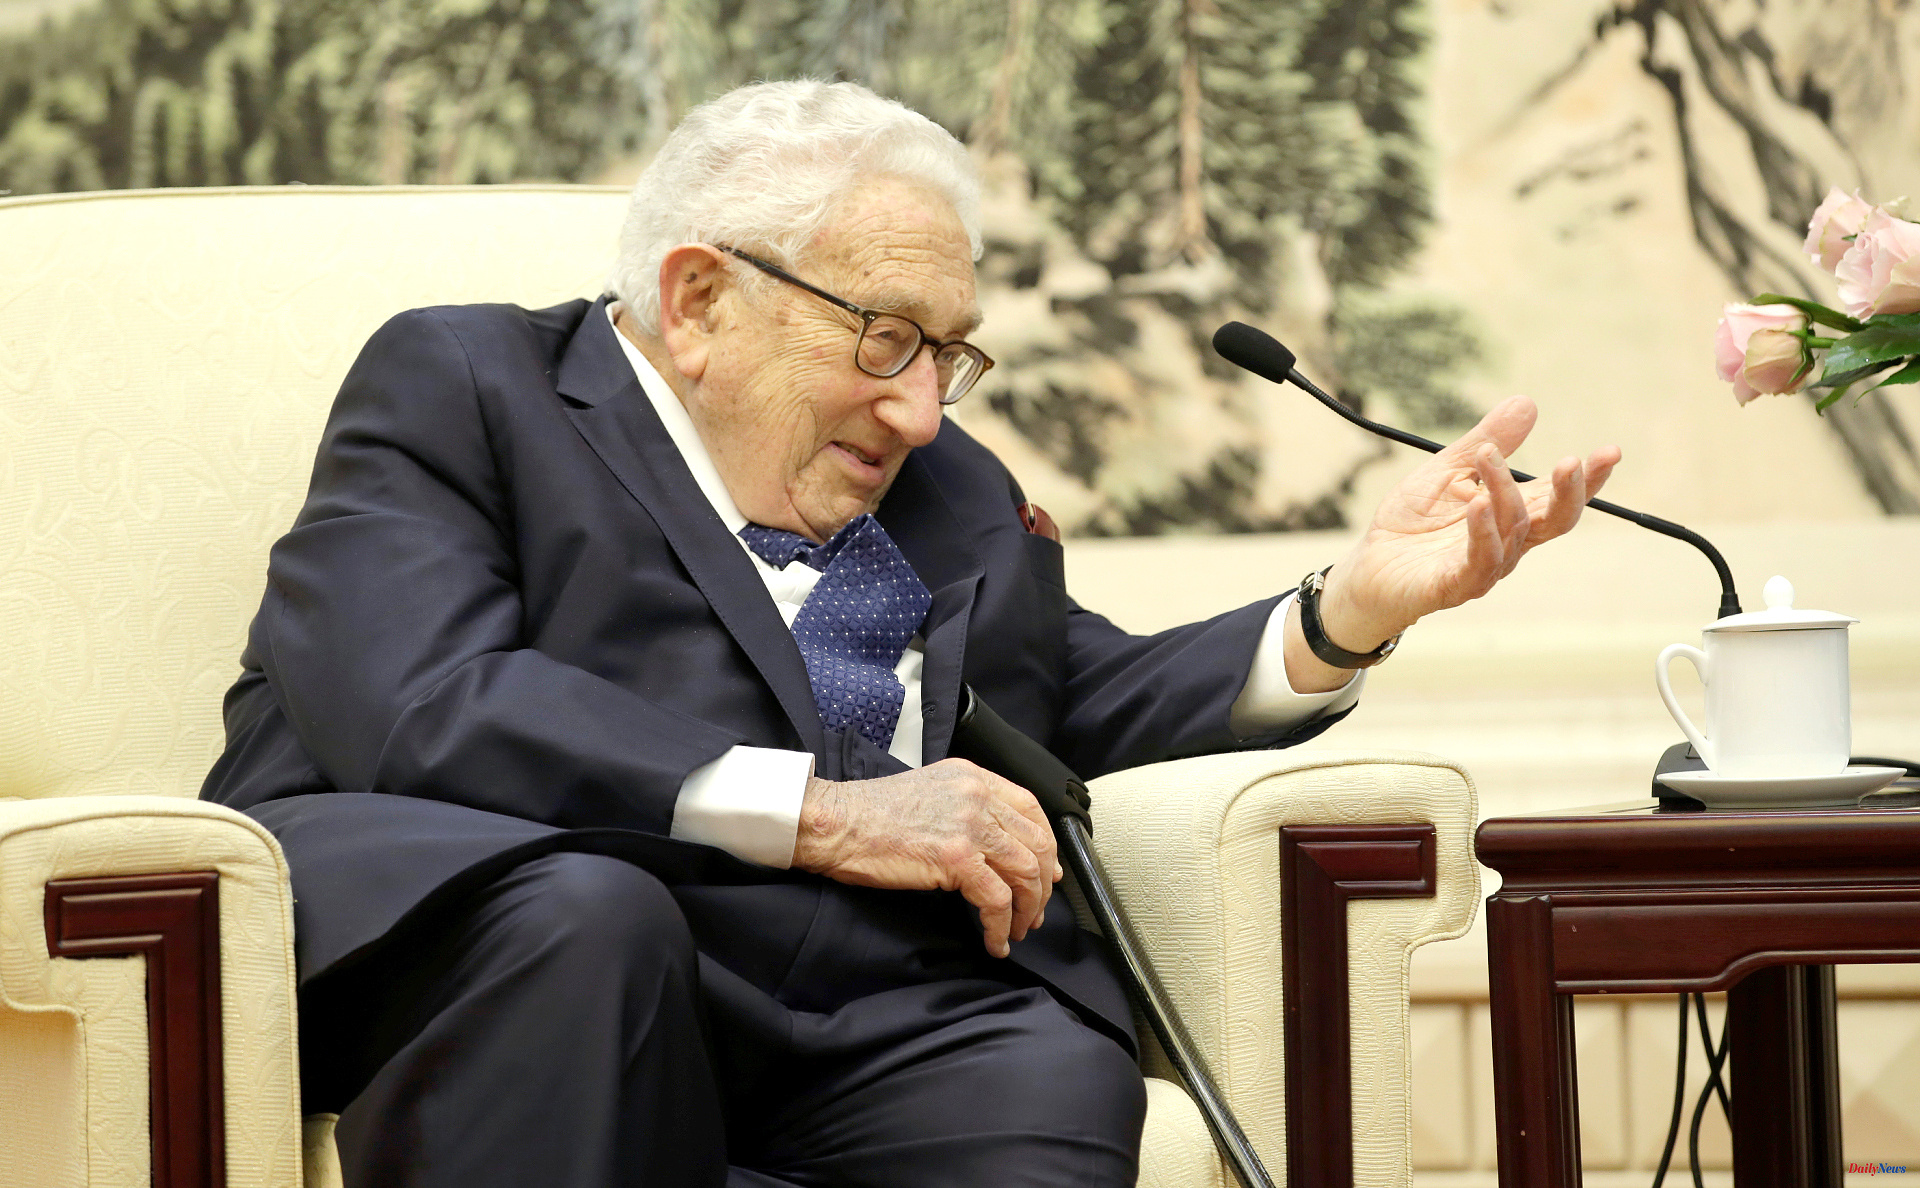 USA Kissinger celebrates 100 years enlarging a broken myth